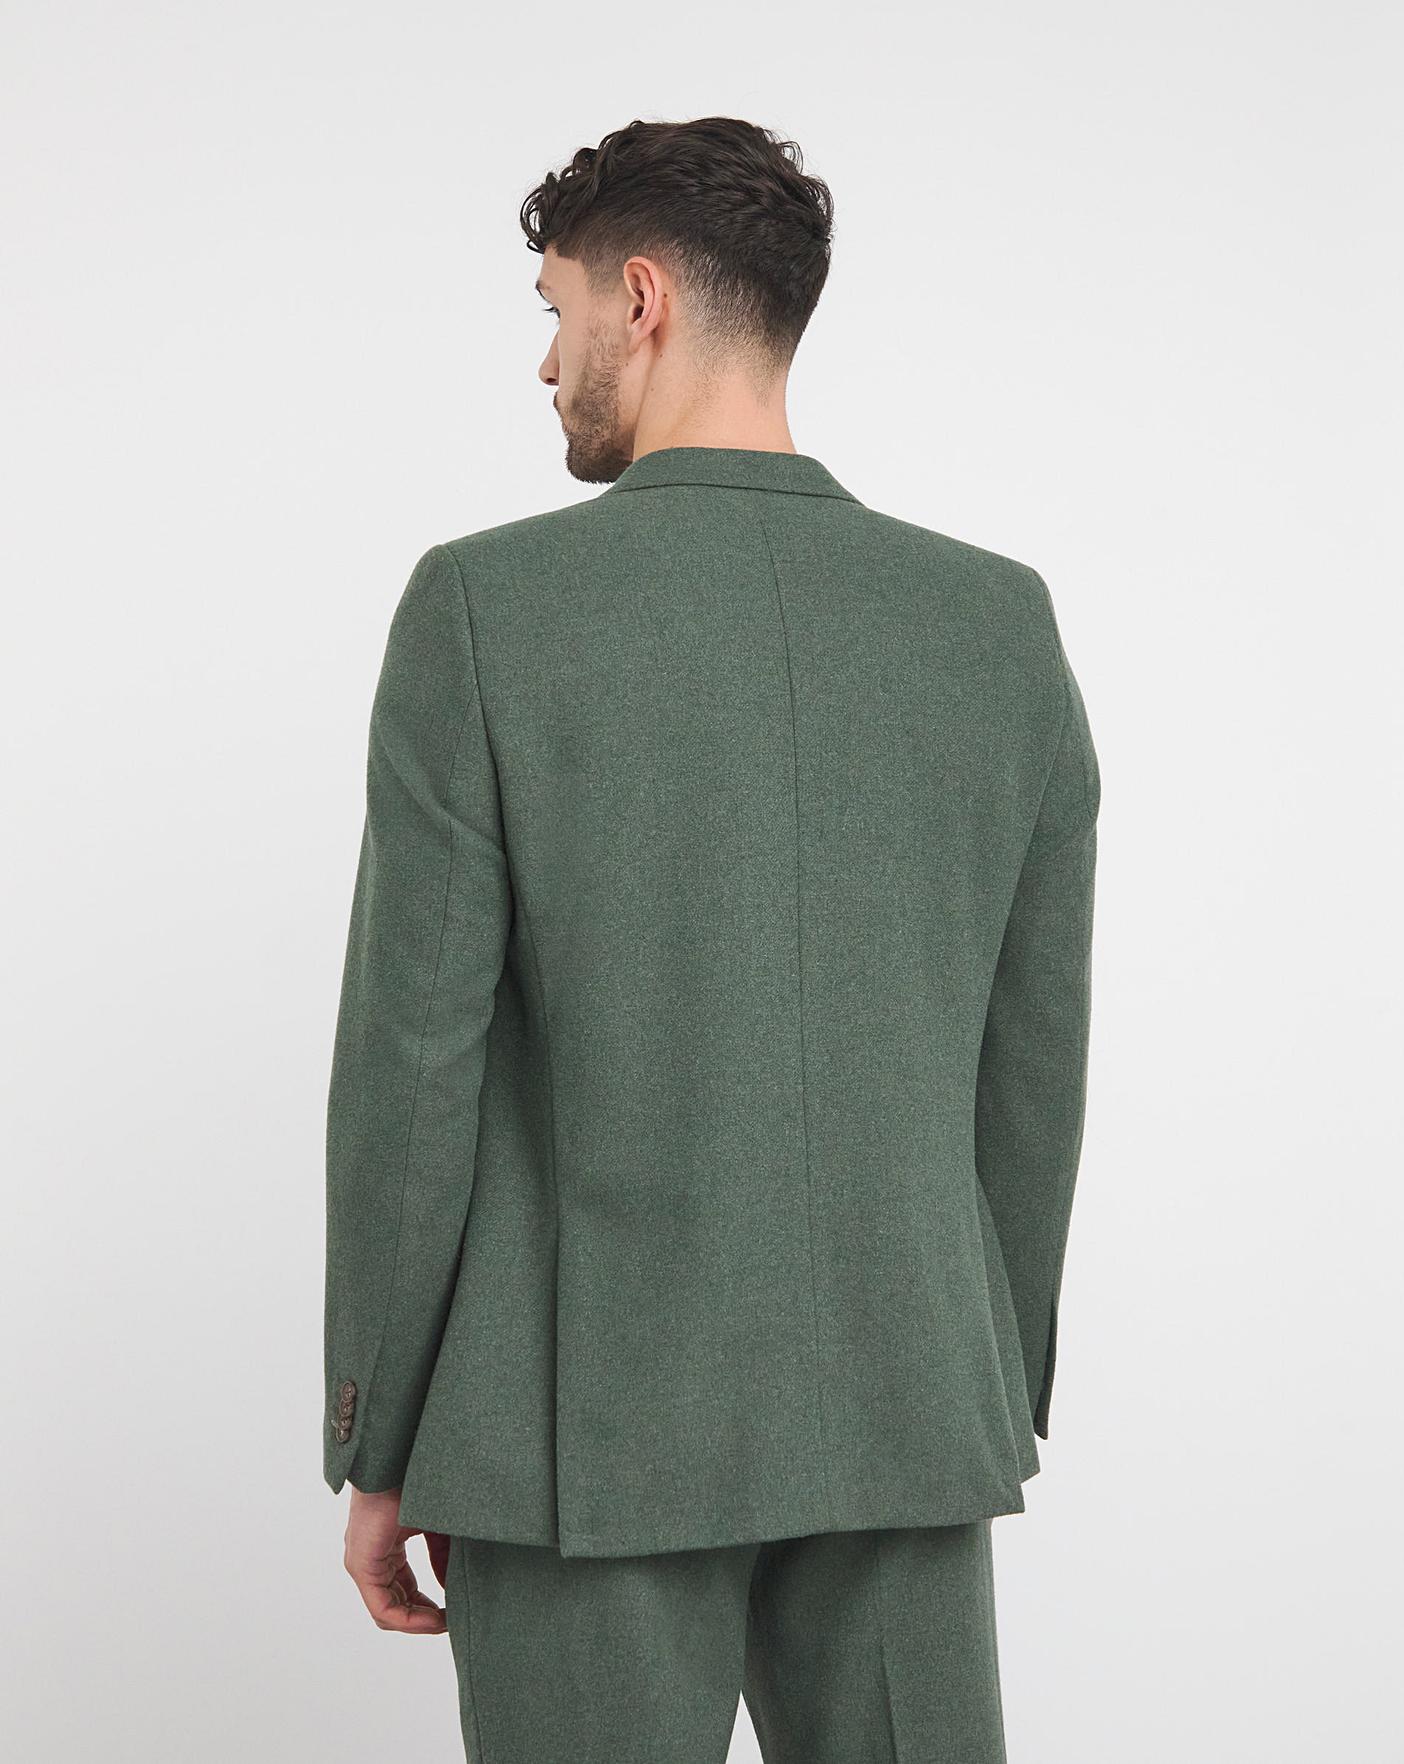 Green Donegal Tweed Suit Jacket